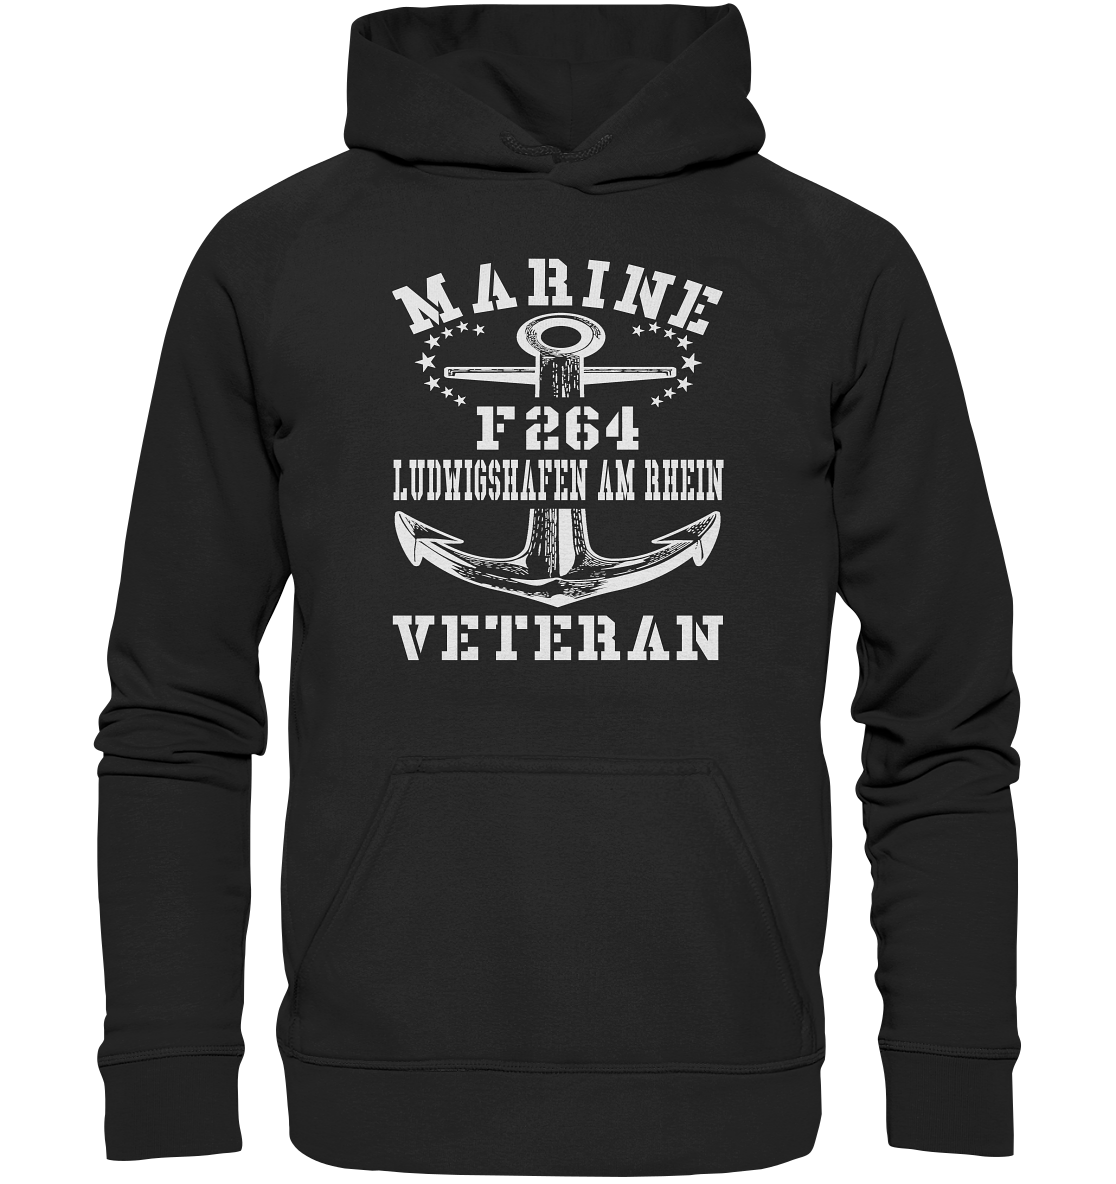 Korvette F264 LUDWIGSHAFEN AM RHEIN Marine Veteran - Basic Unisex Hoodie XL